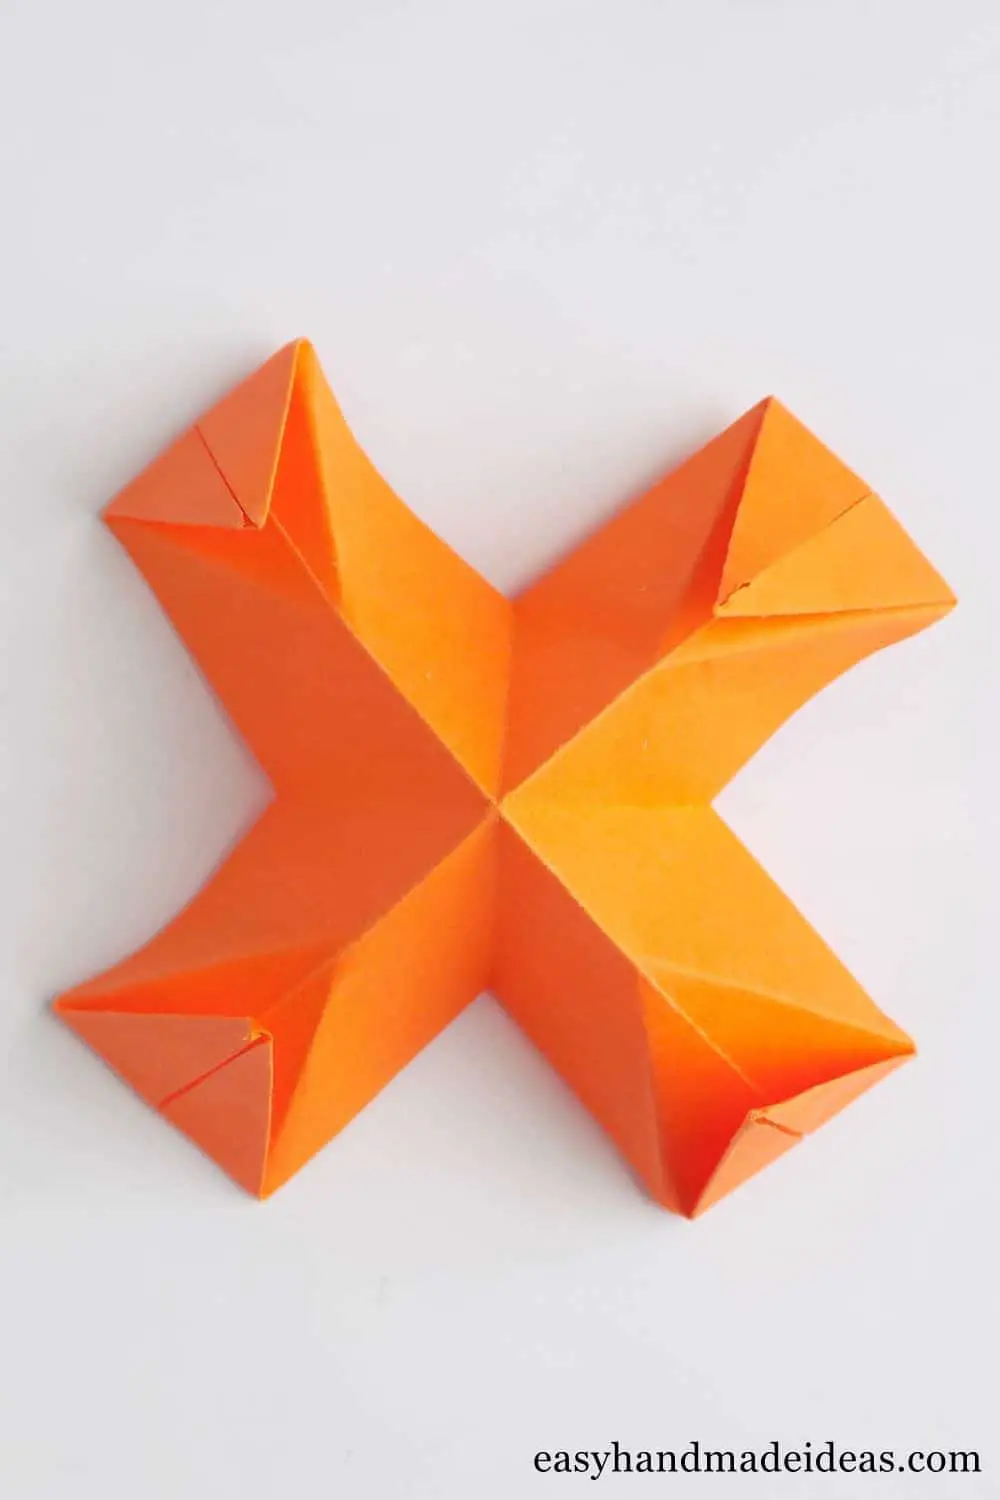 Ready-made origami trap